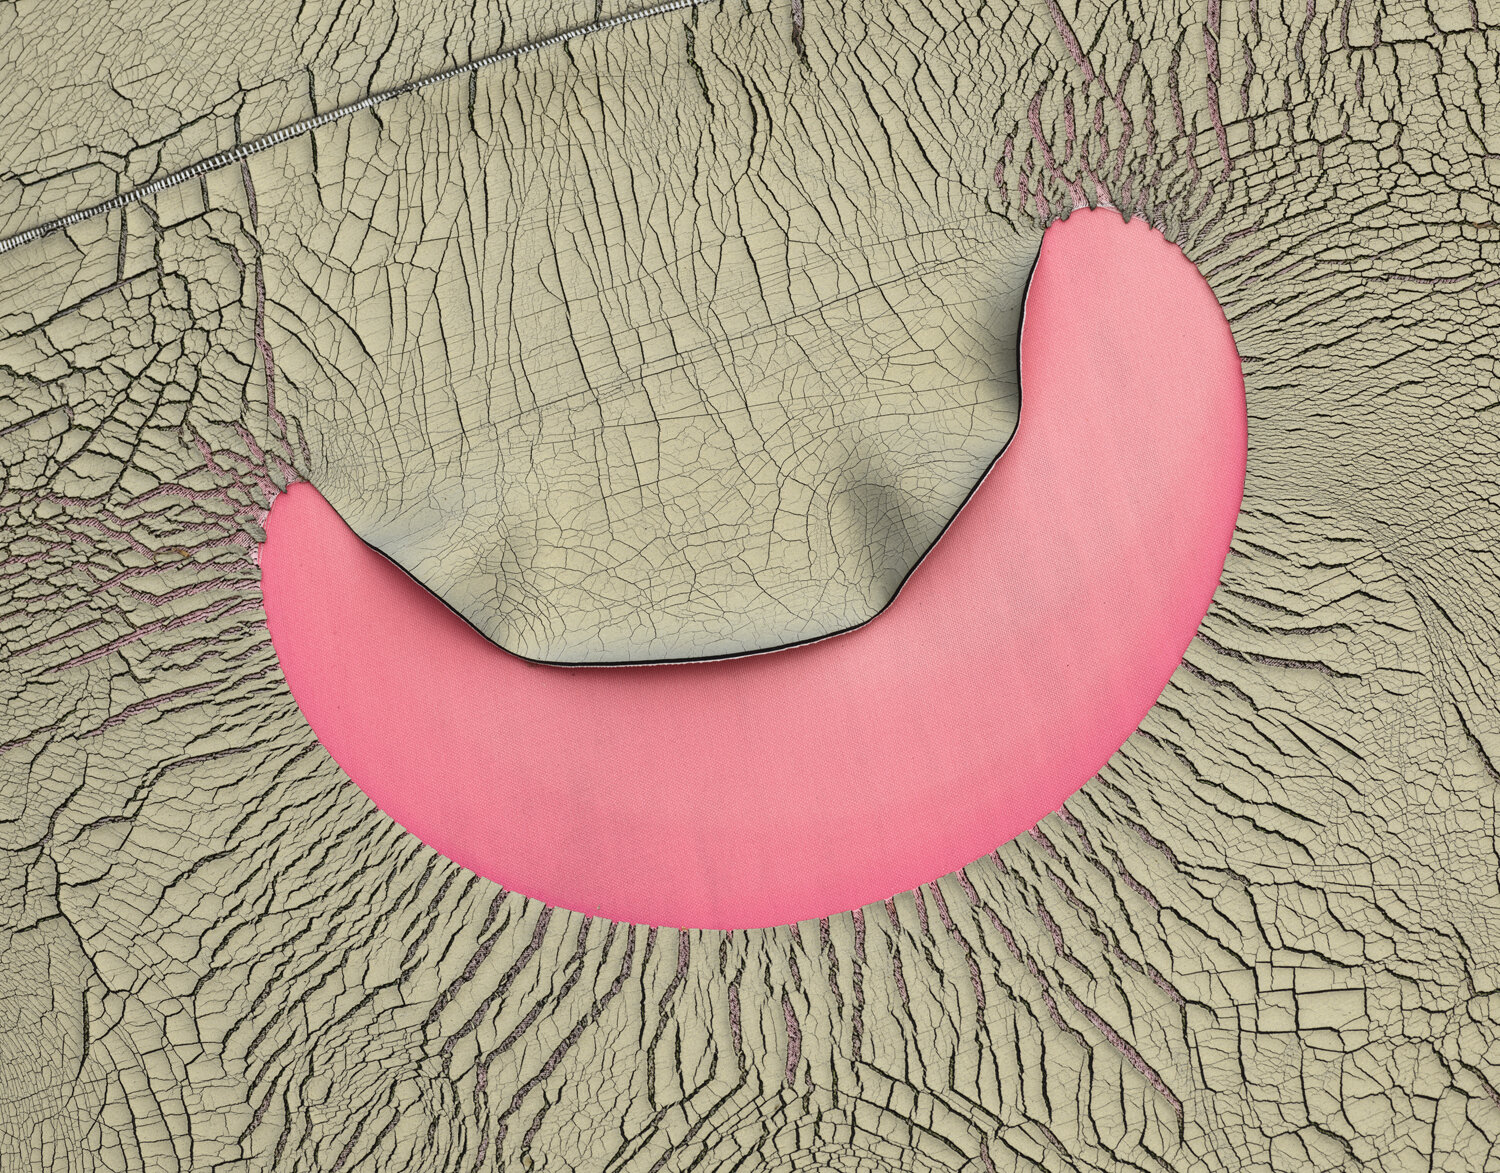 Detail of glideskin on Pink Turret, Spring 2020